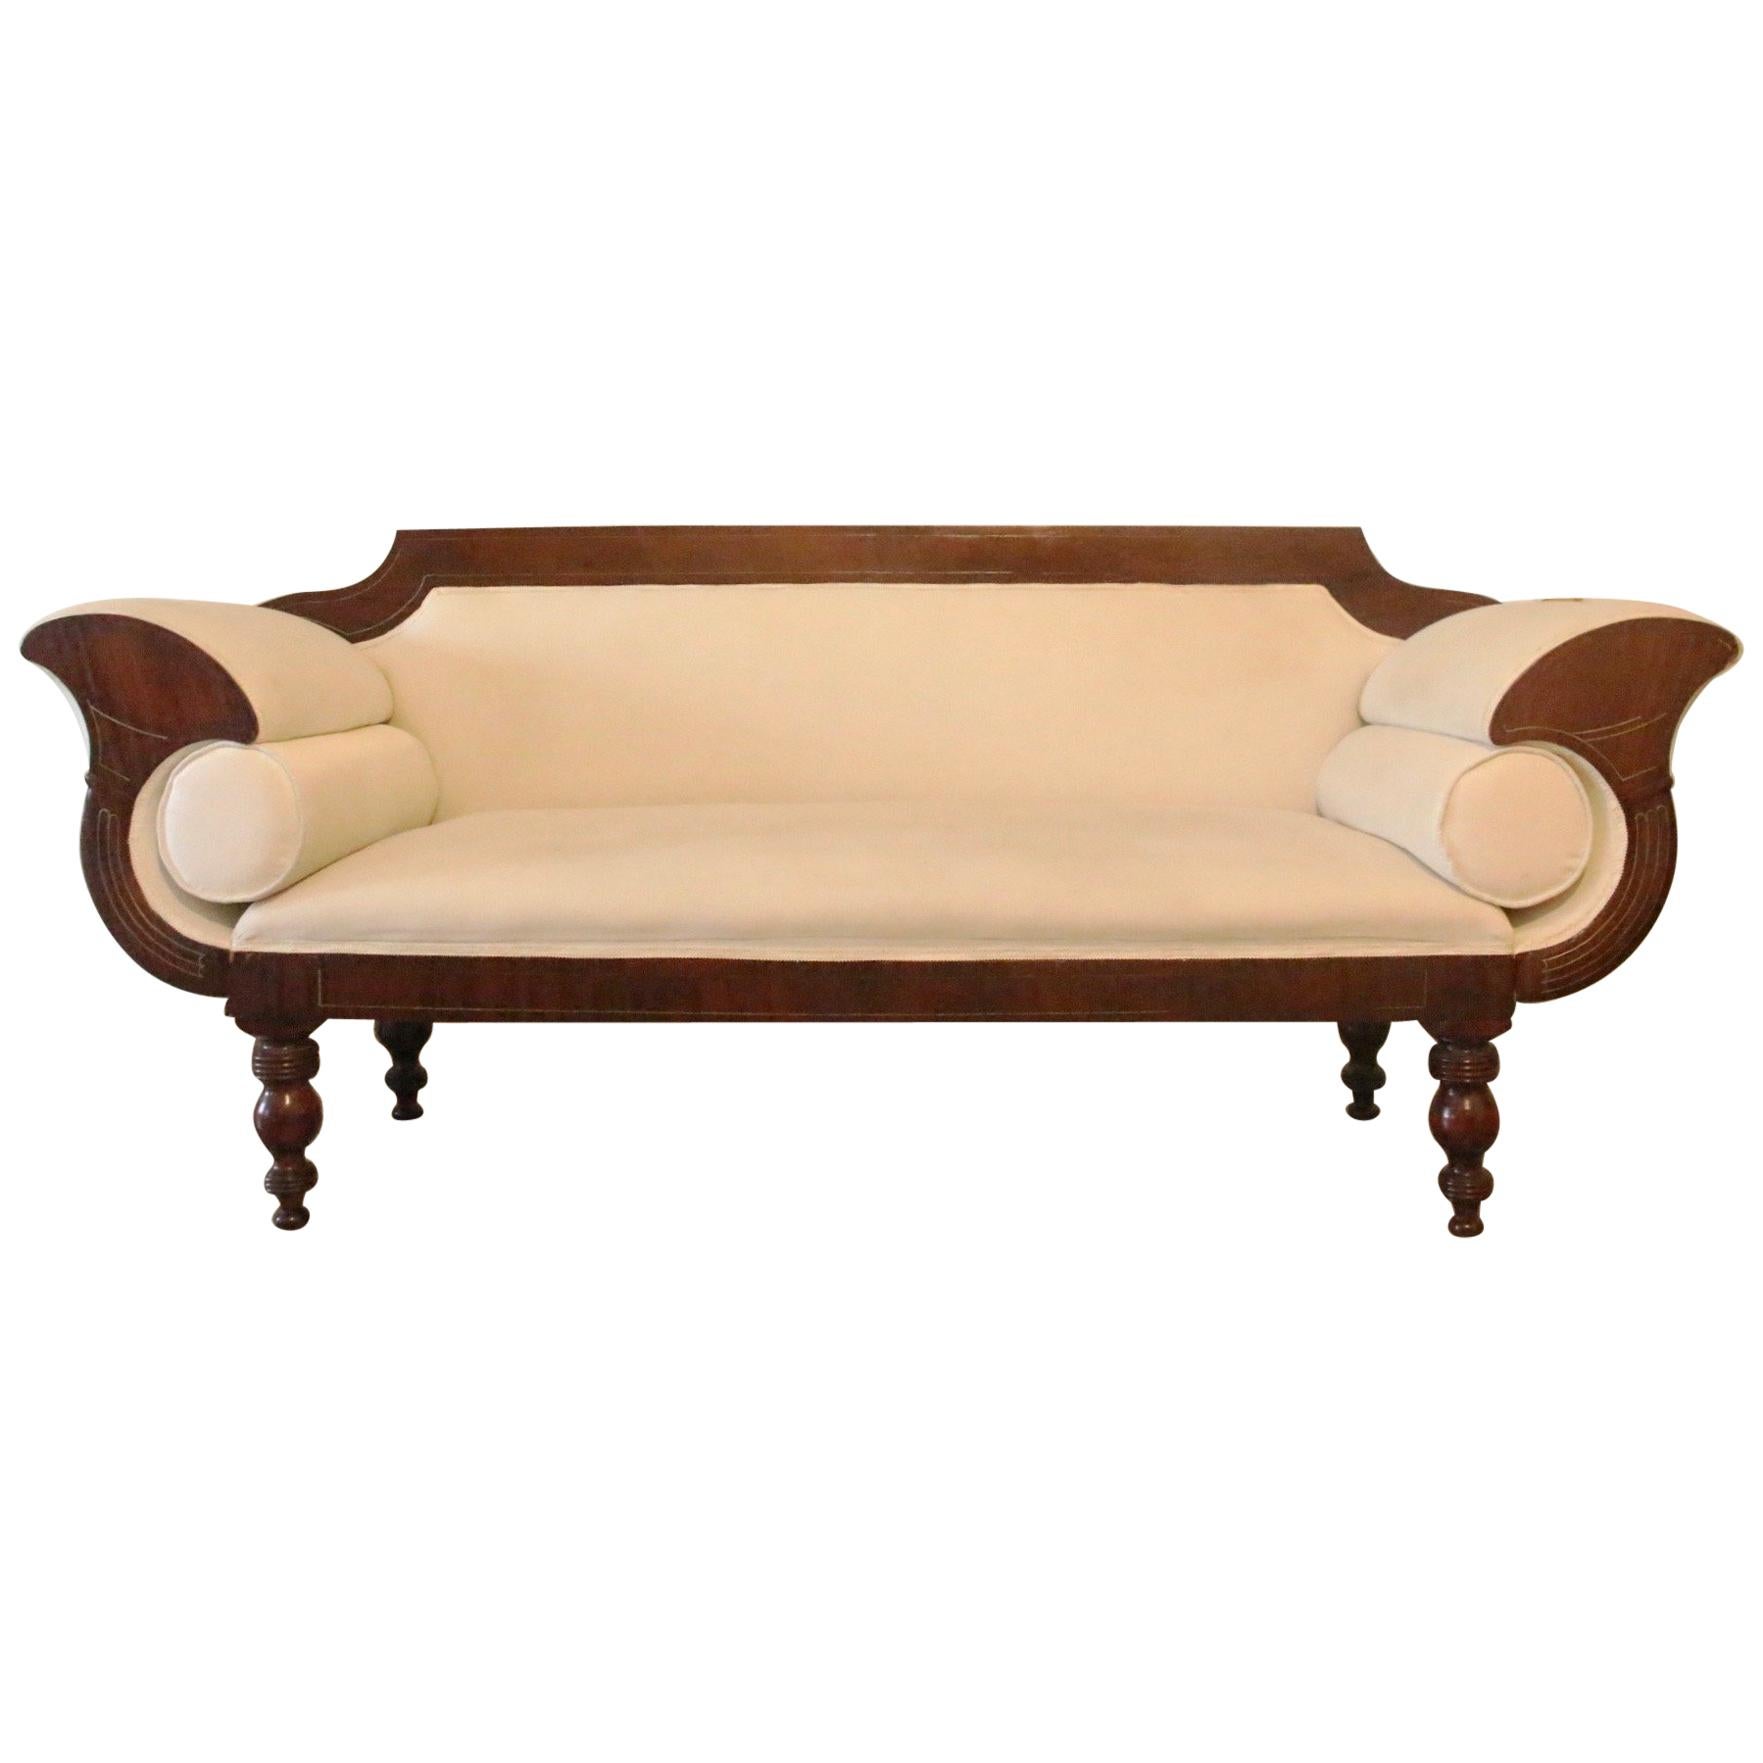  Biedermeier Louis Philippe Romantic Classic Cuban Mahogany Spanish Sofa, 1830 For Sale